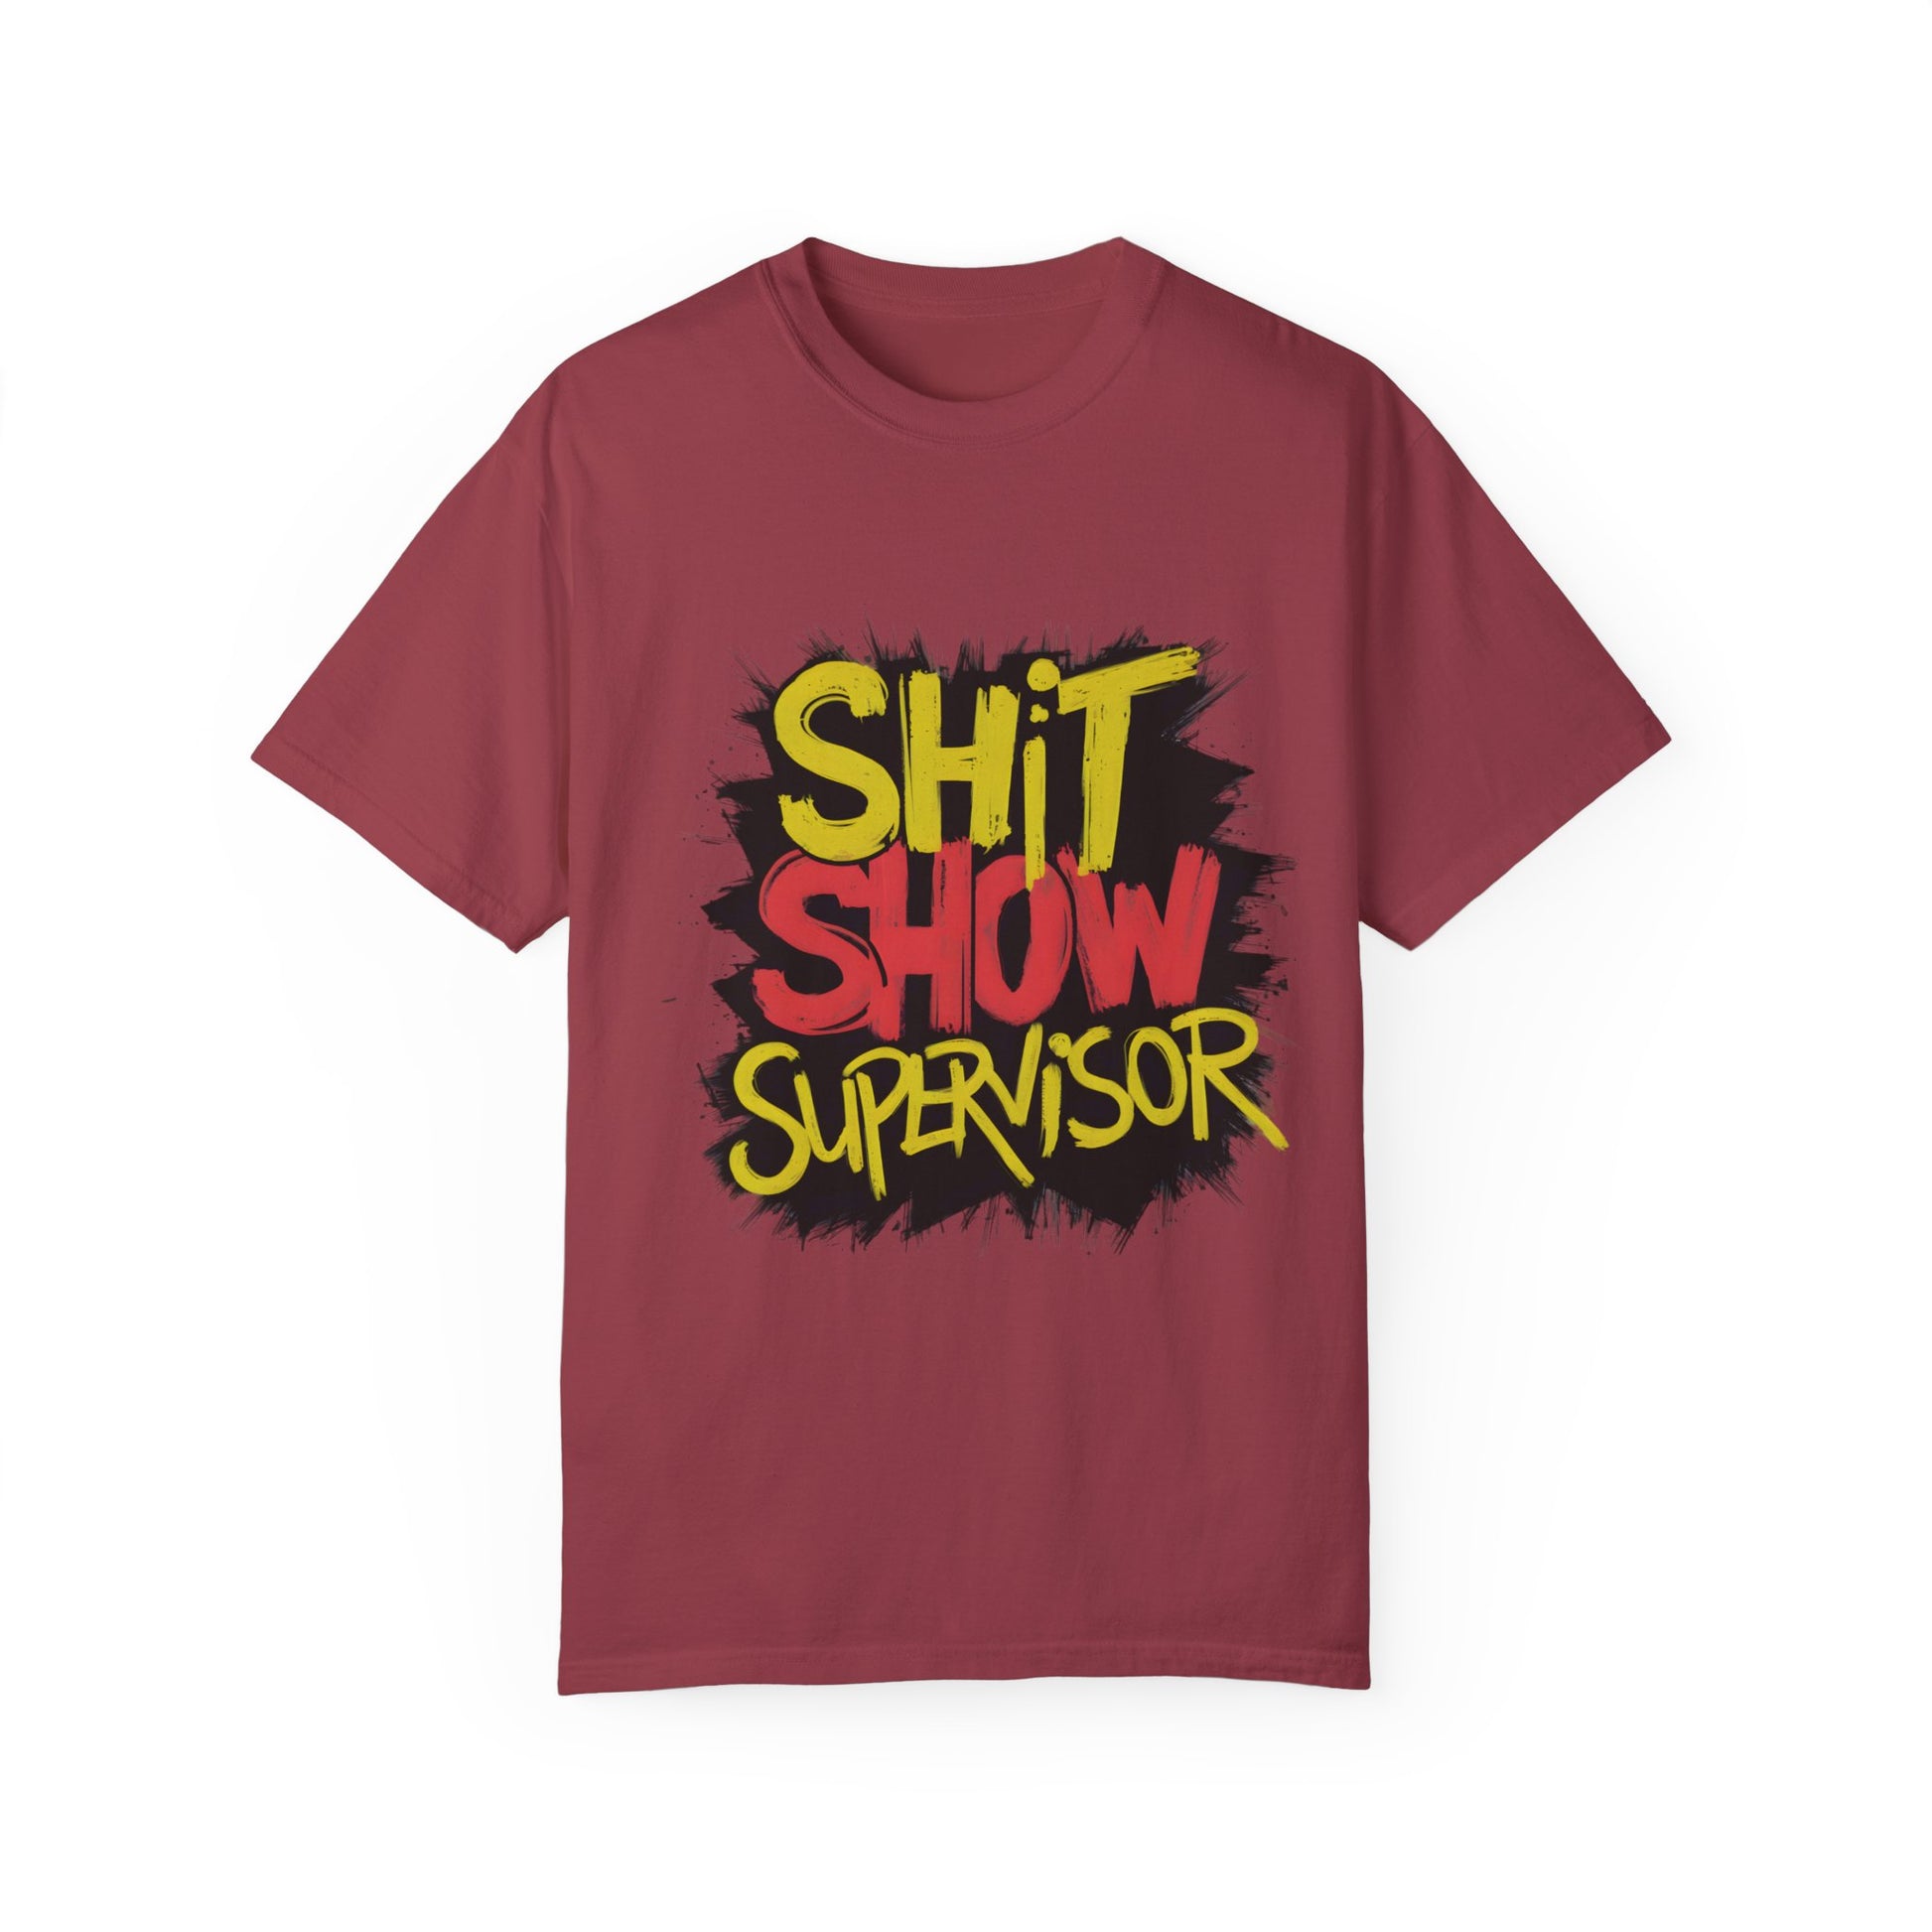 Shit Show Supervisor Urban Sarcastic Graphic Unisex Garment Dyed T-shirt Cotton Funny Humorous Graphic Soft Premium Unisex Men Women Chili T-shirt Birthday Gift-7